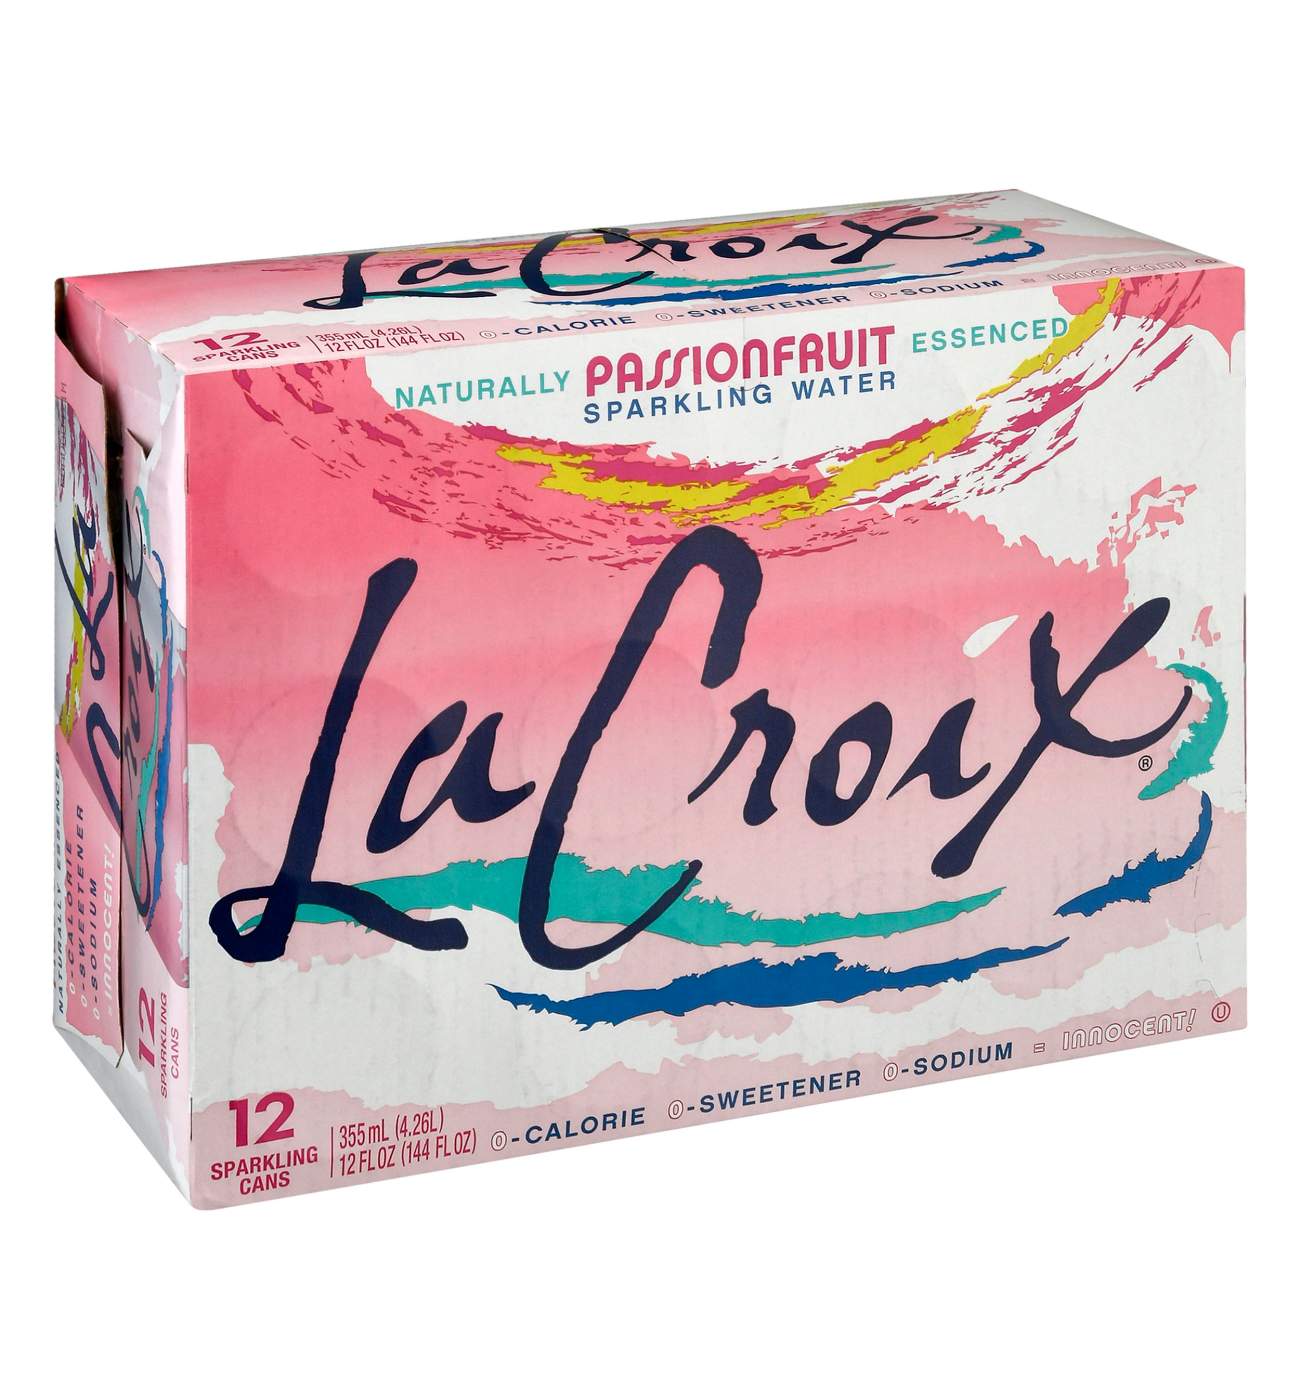 LaCroix Passion Fruit Sparkling Water 12 oz Cans; image 1 of 2